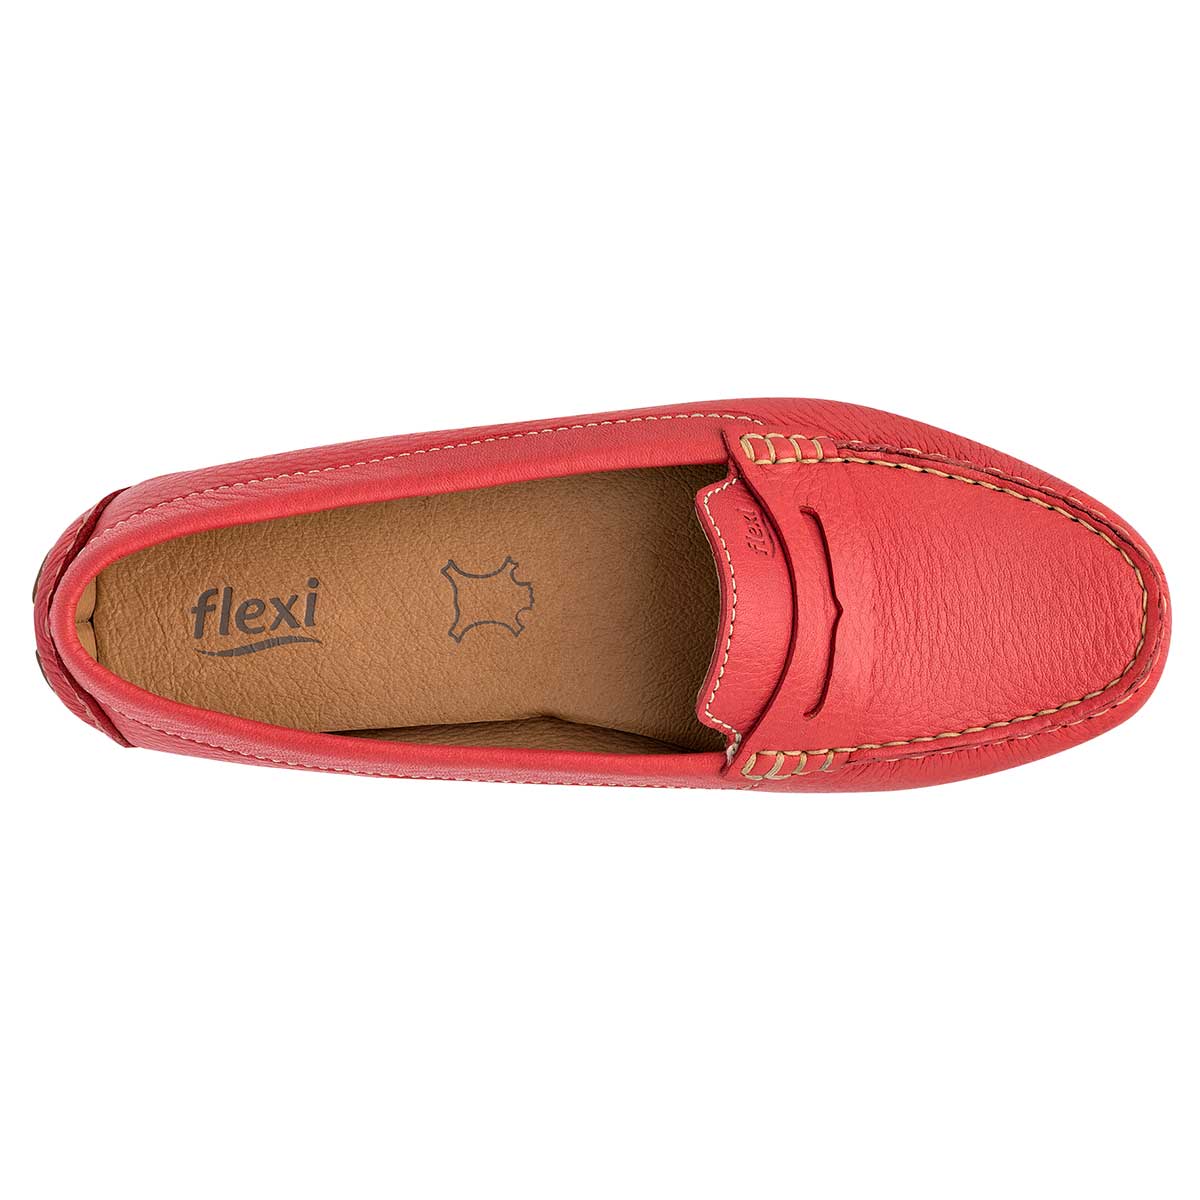 Zapatos Flexi – Envíos Gratis | RepublicaBlanca.com